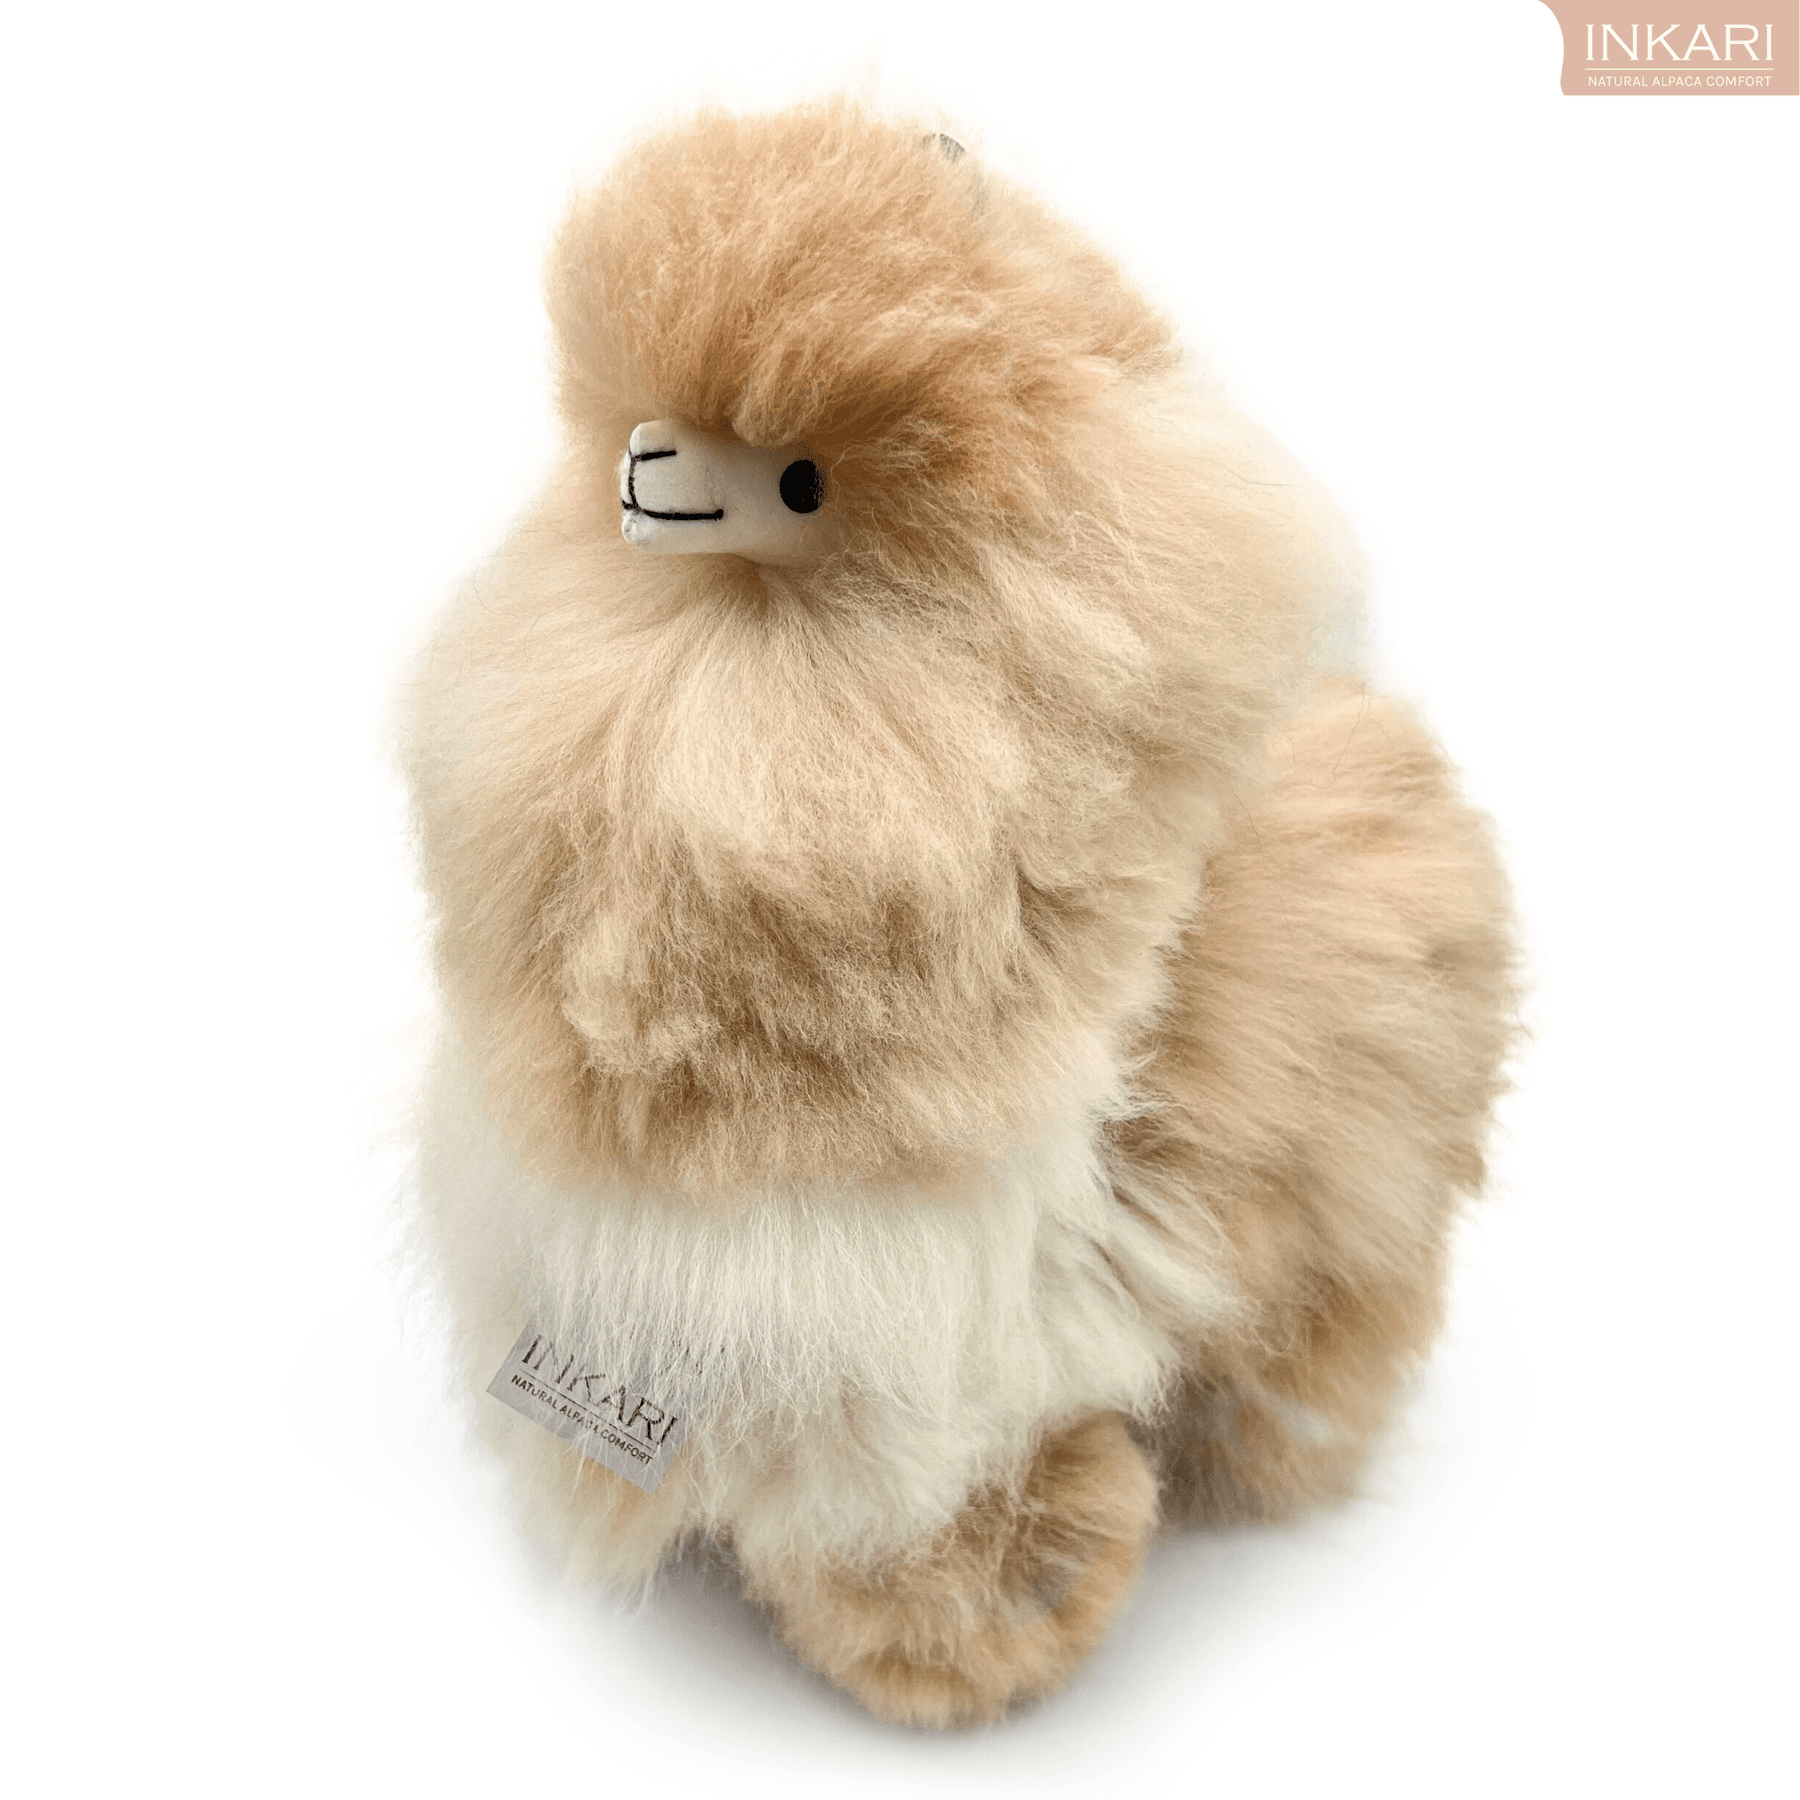 Monsterfluff - Large (50cm) - Alpaca Stuffed Animal